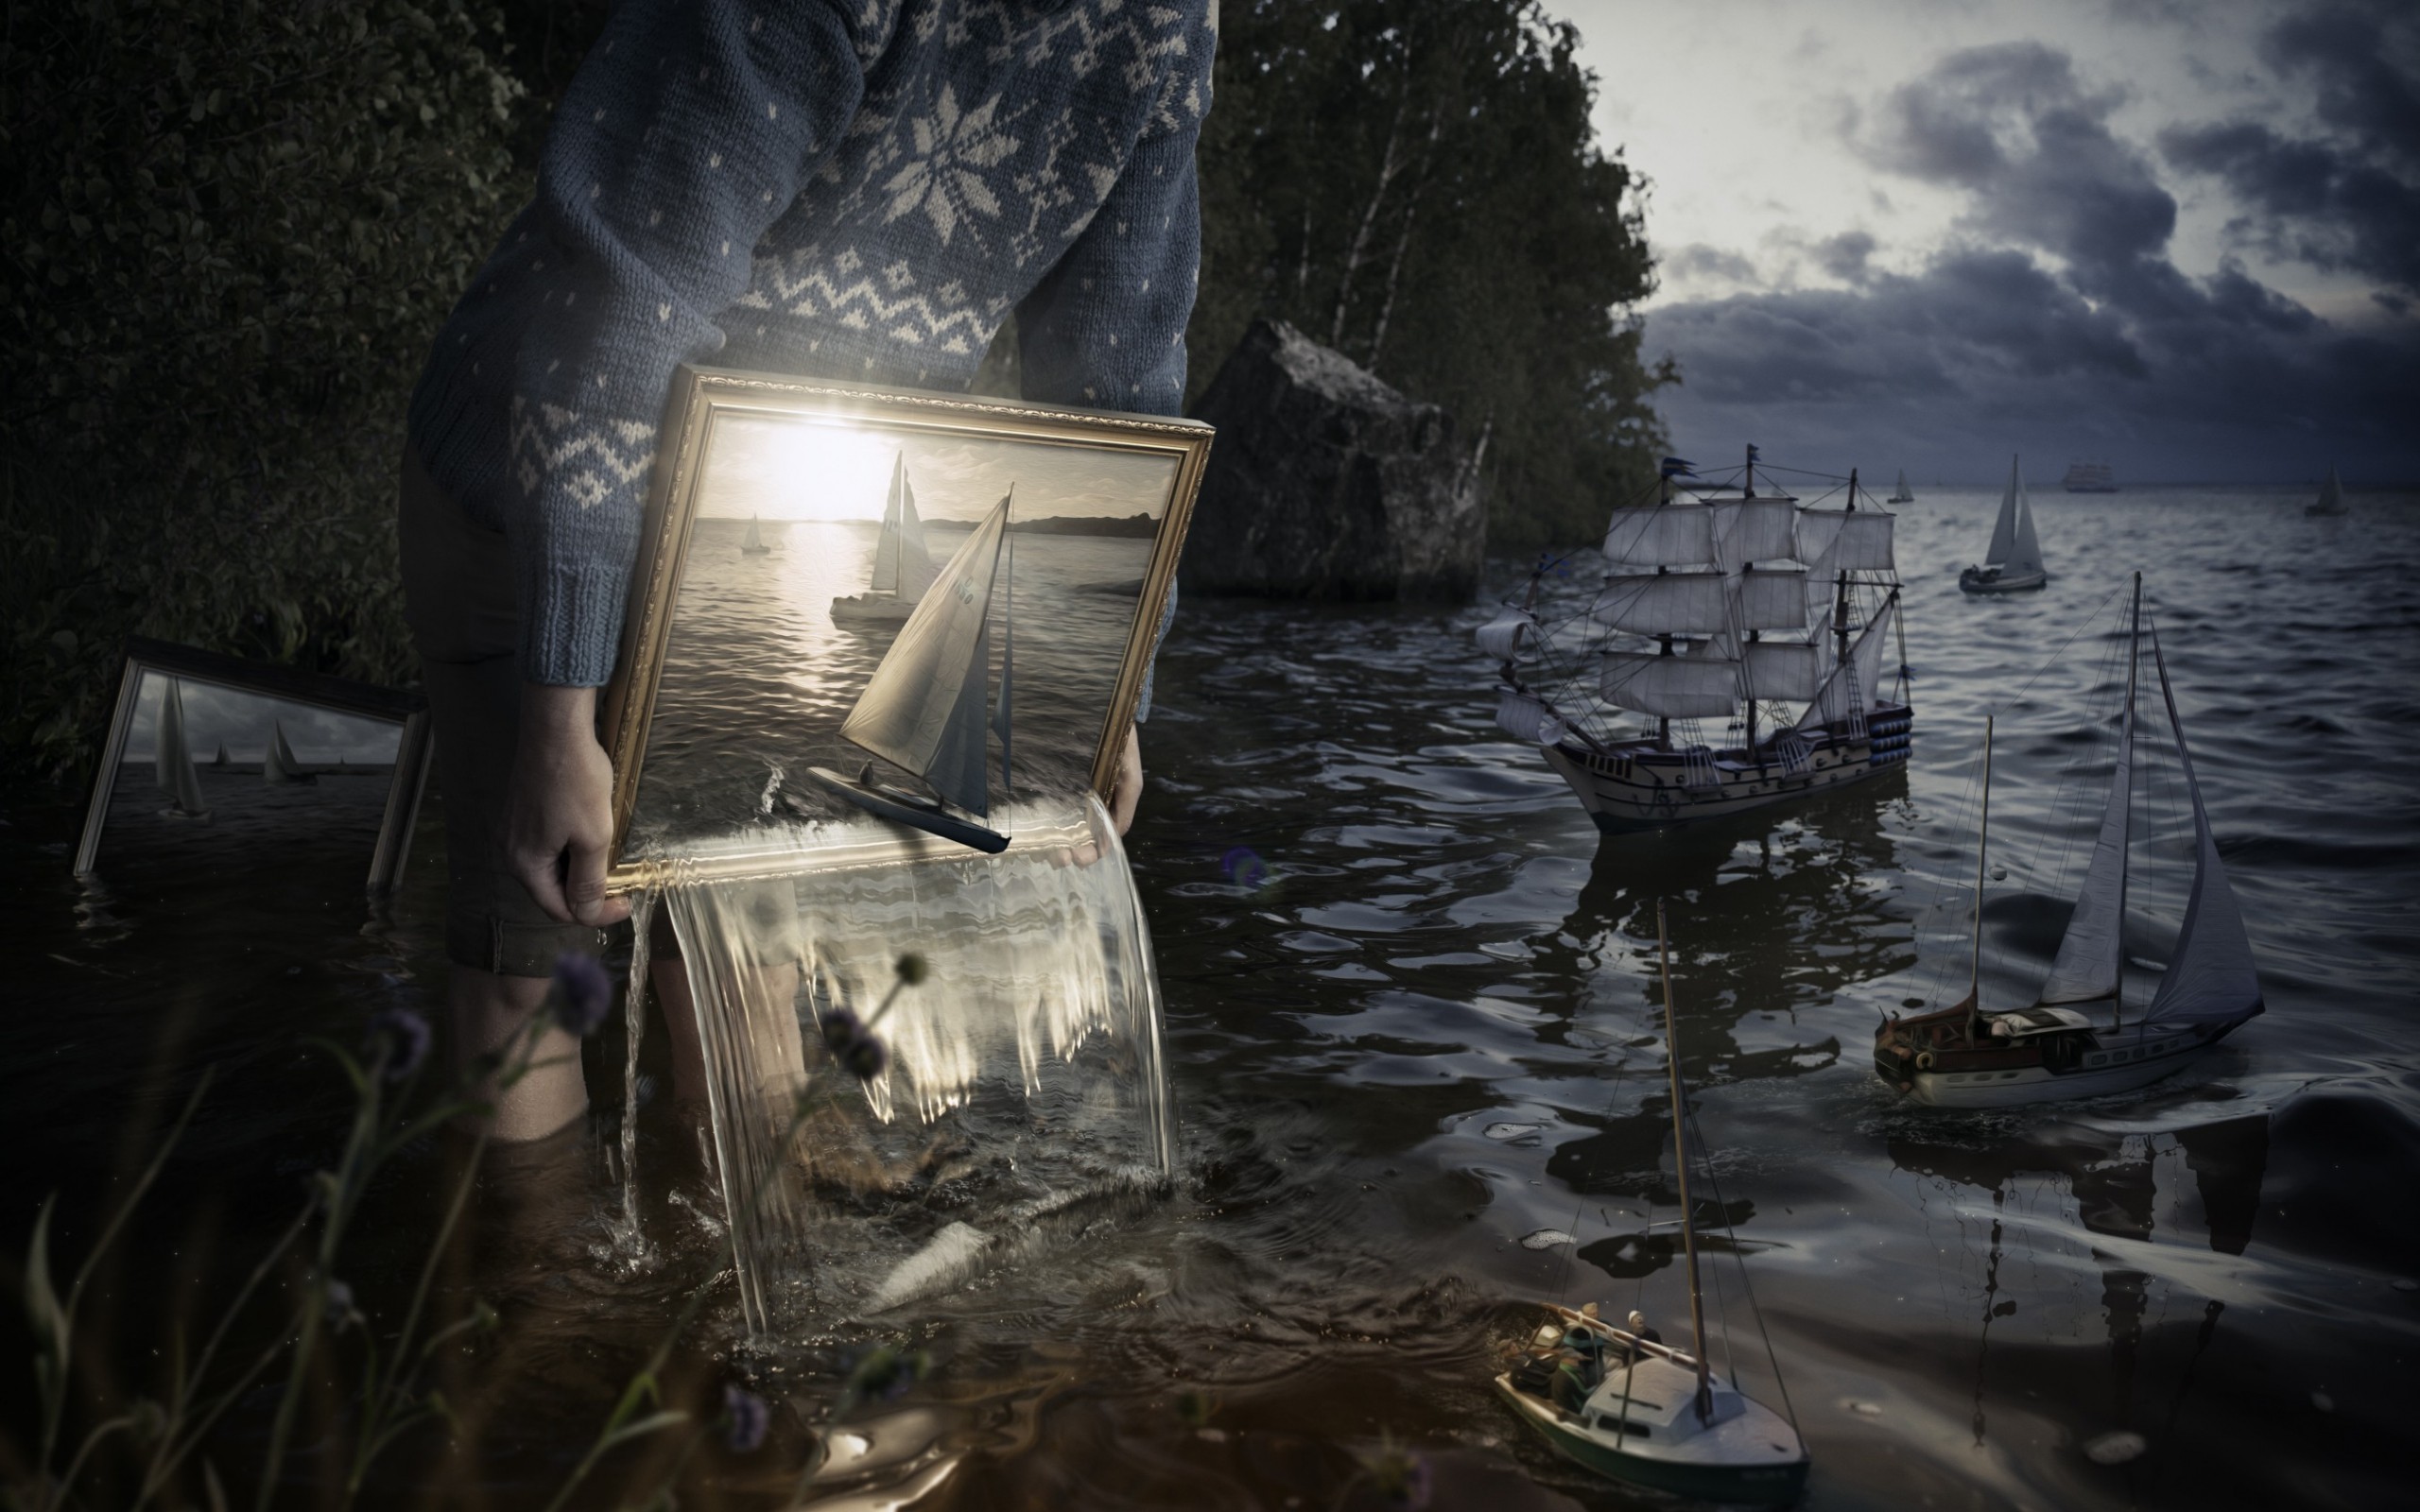 digital Art, Adobe Photoshop, Creativity, Men, Picture Frames, Water, Sea, Sailing Ship, Trees, Clouds, Rock, Erik Johansson Wallpaper